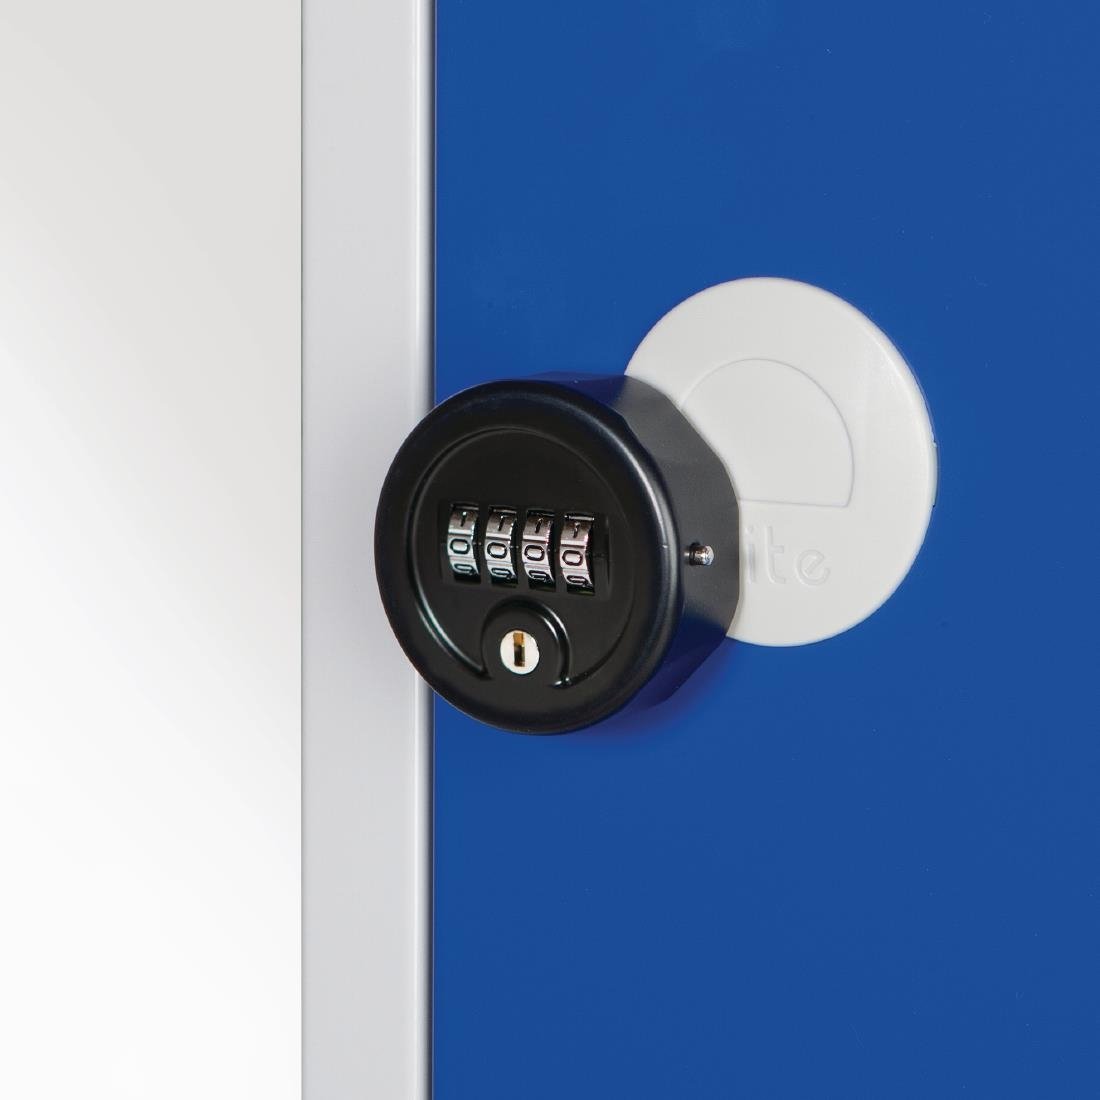 GR682-CL Elite Six Door Manual Combination Locker Locker Graphite Grey JD Catering Equipment Solutions Ltd